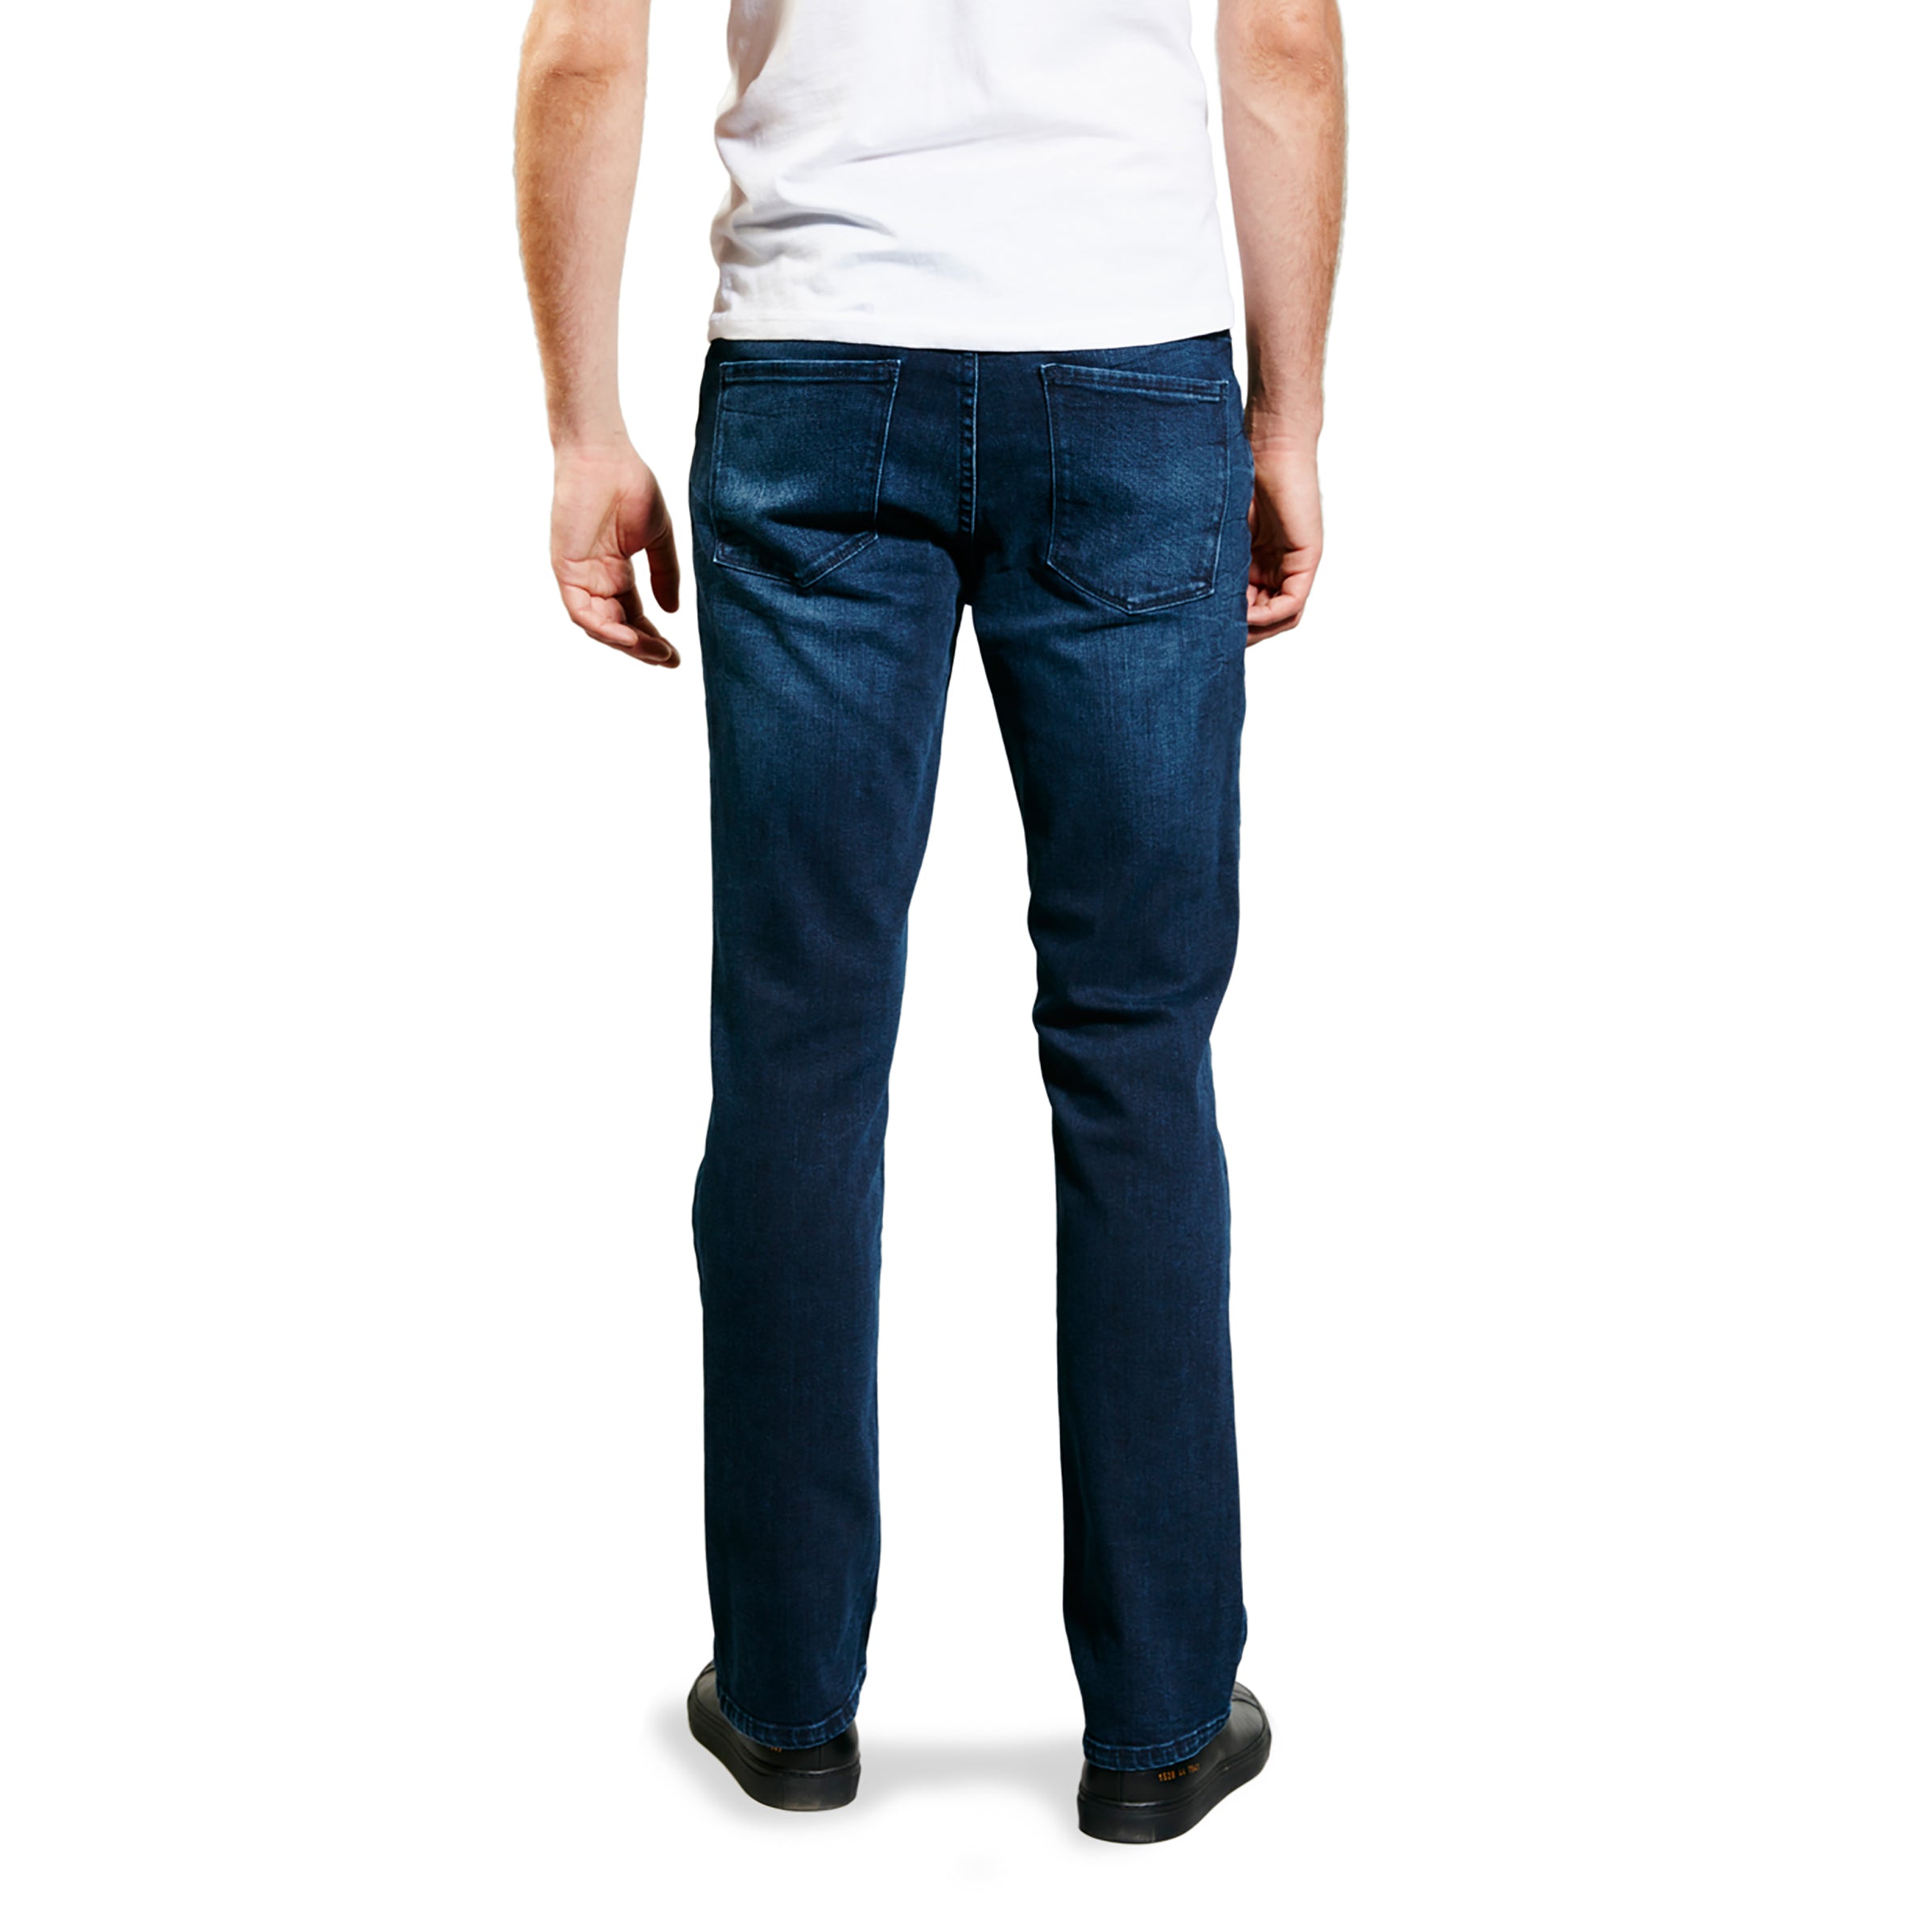 Men wearing Azul oscuro/medio Straight Staple Jeans